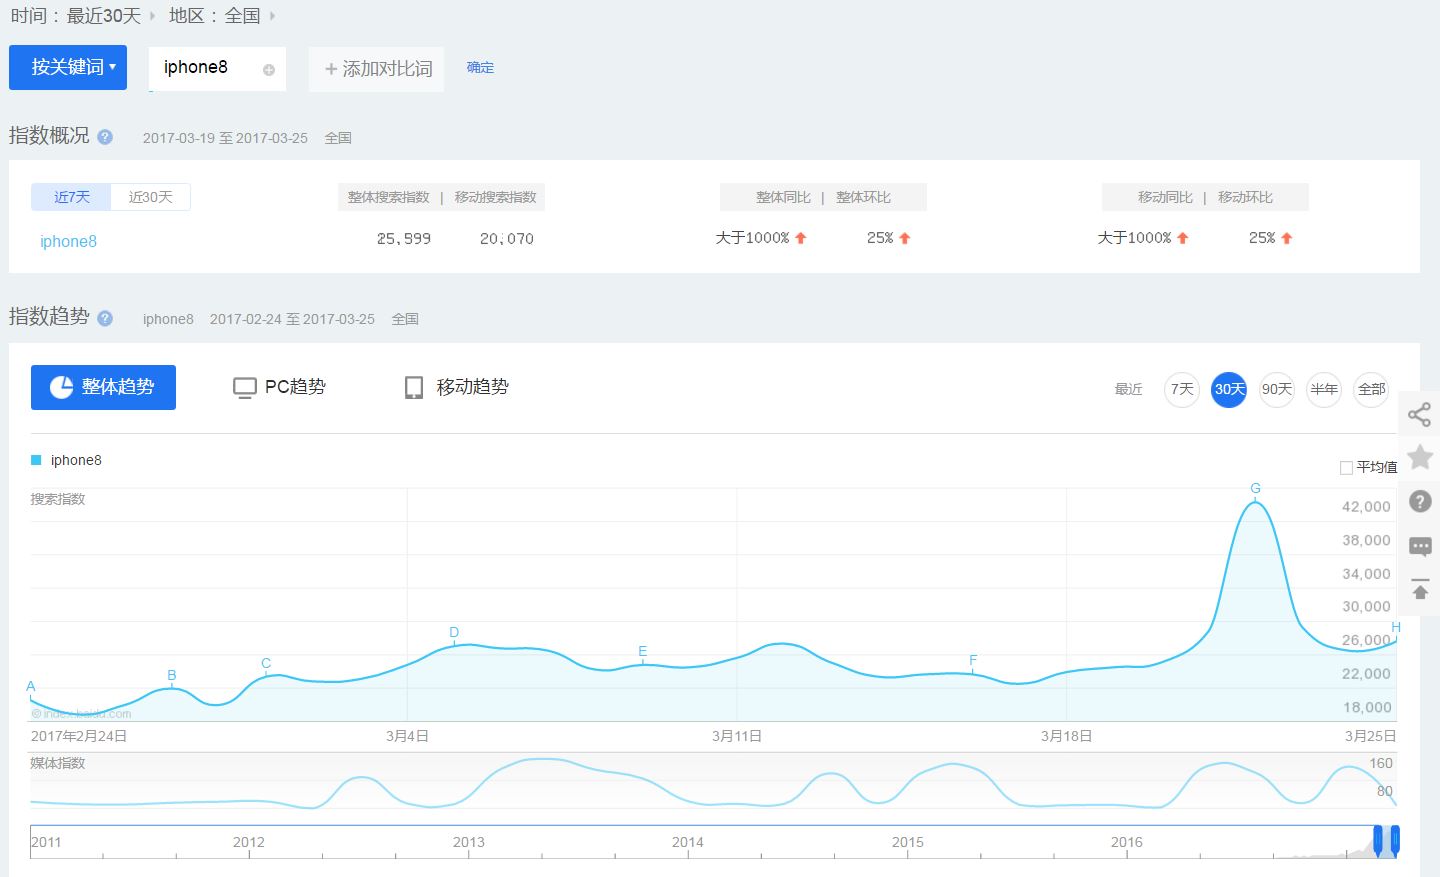 “iPhone8” using Baidu Index Tool